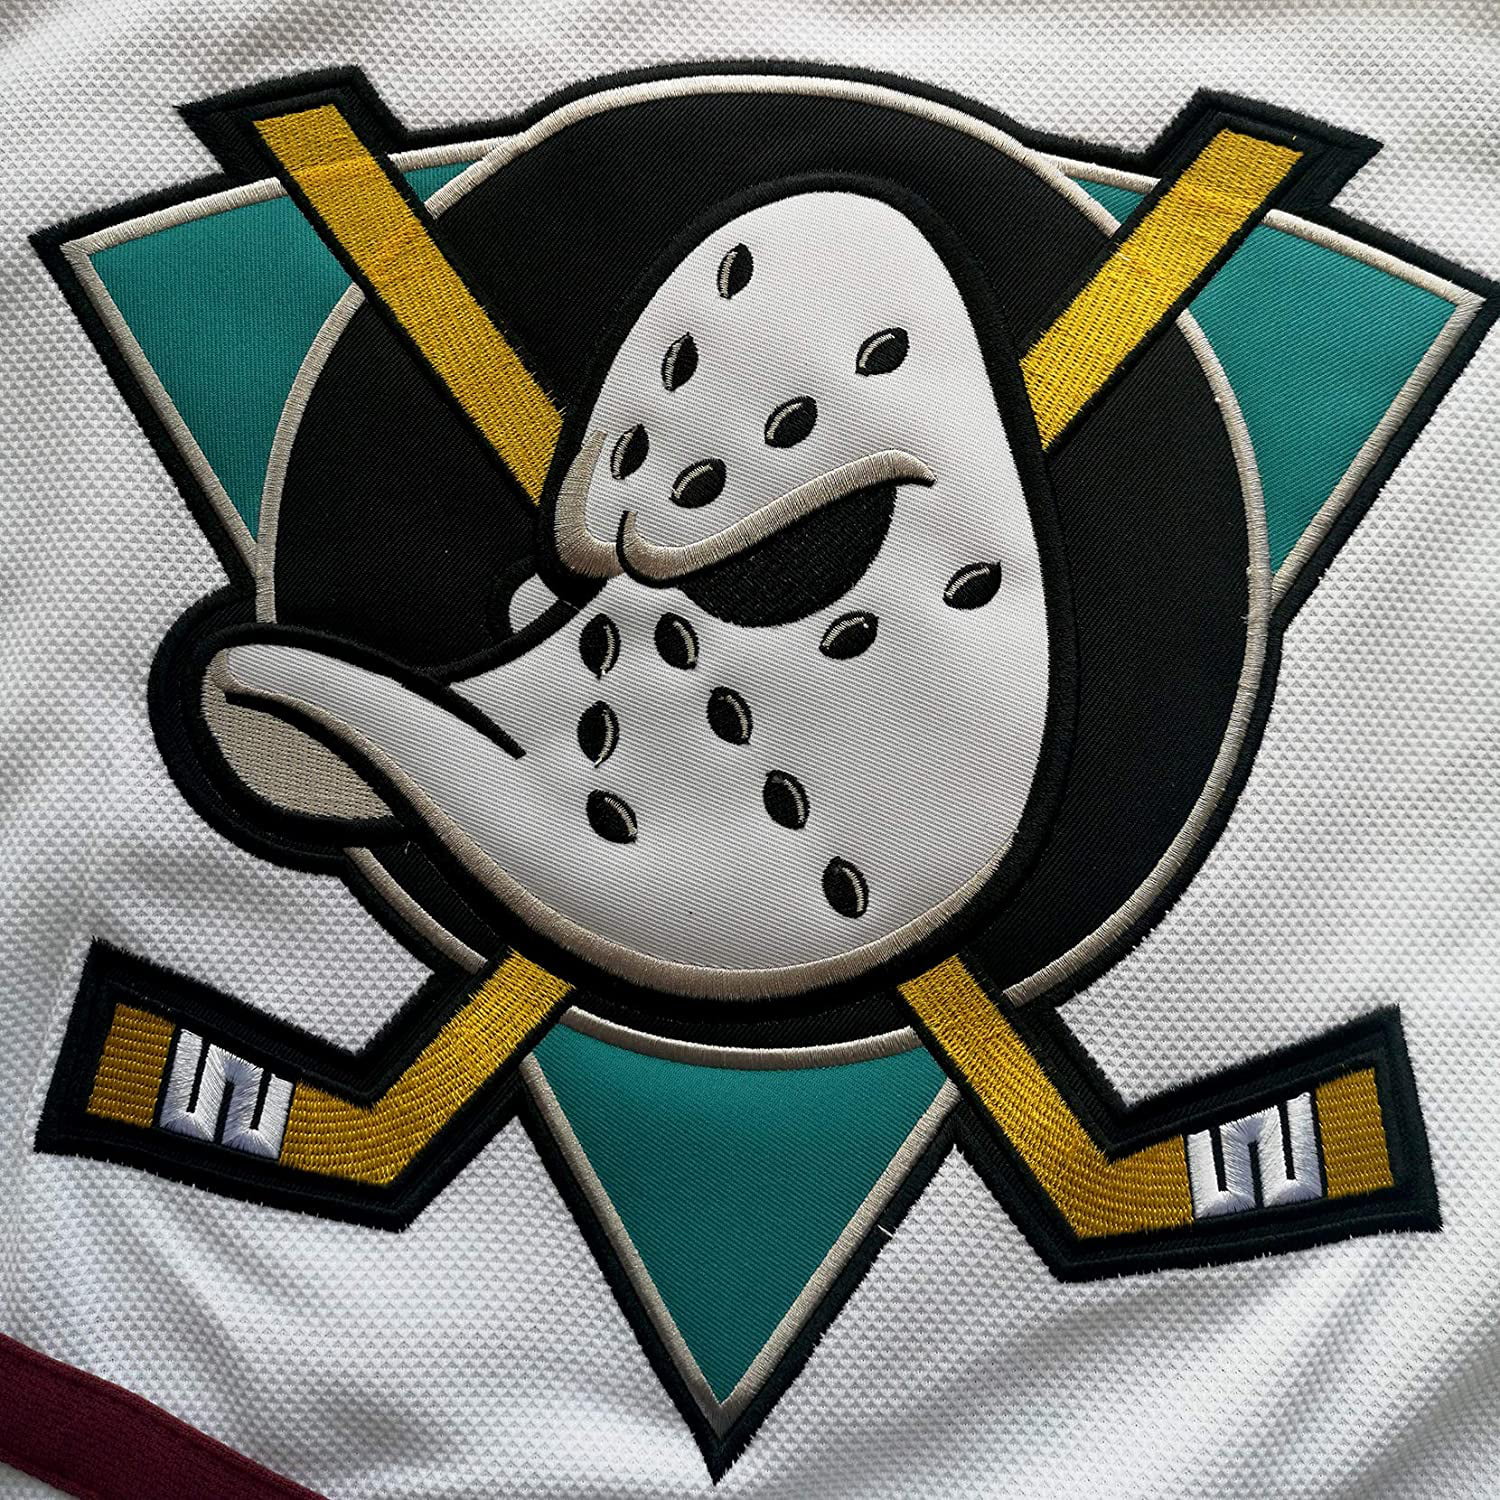 Adam Banks #99 Mighty Ducks Hockey Jersey – MOLPE